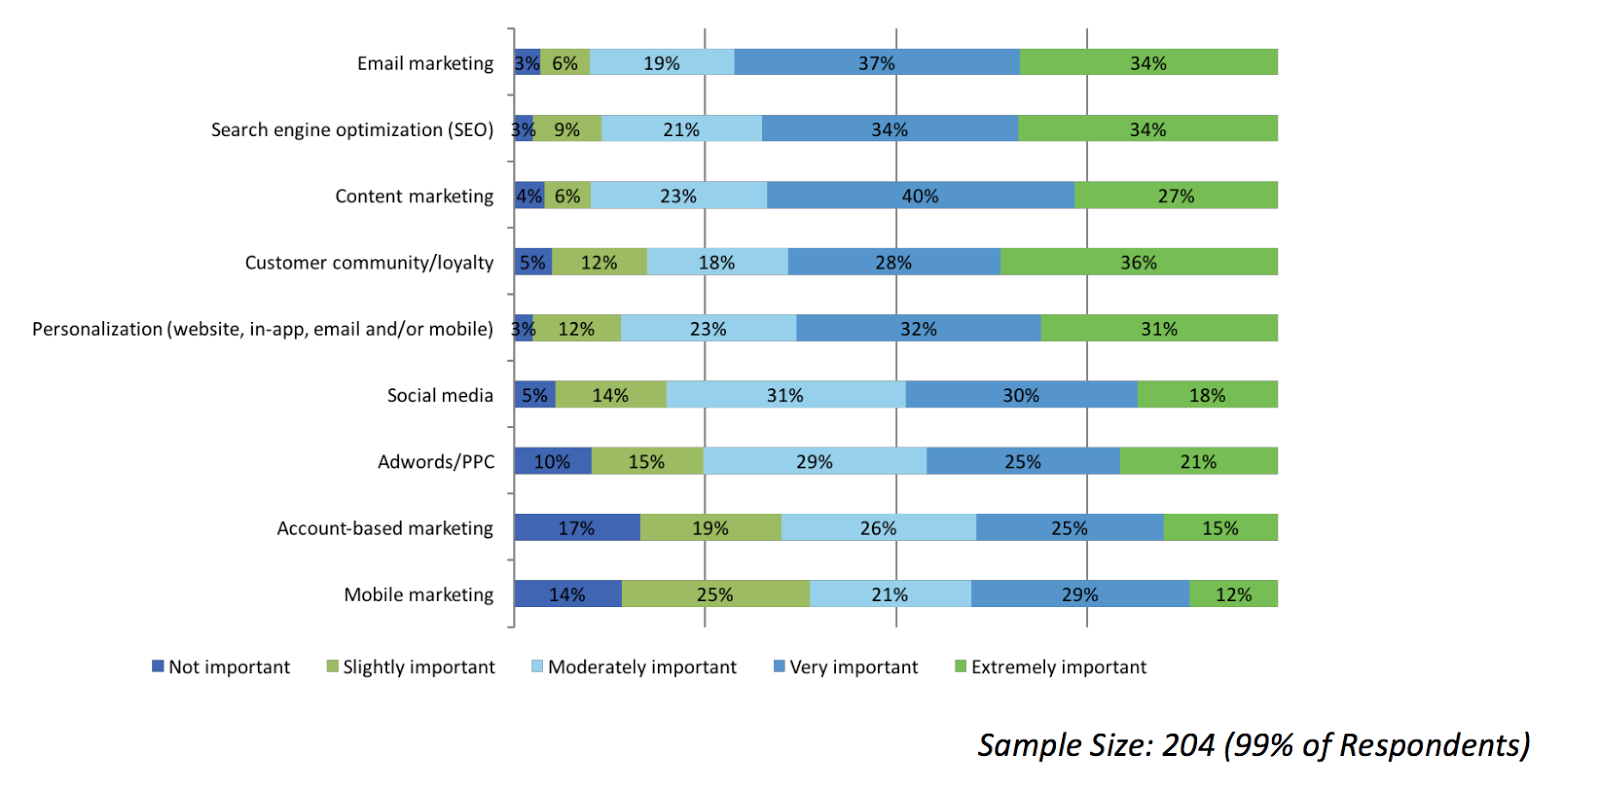 depersonalization in marketing stats about personalization 